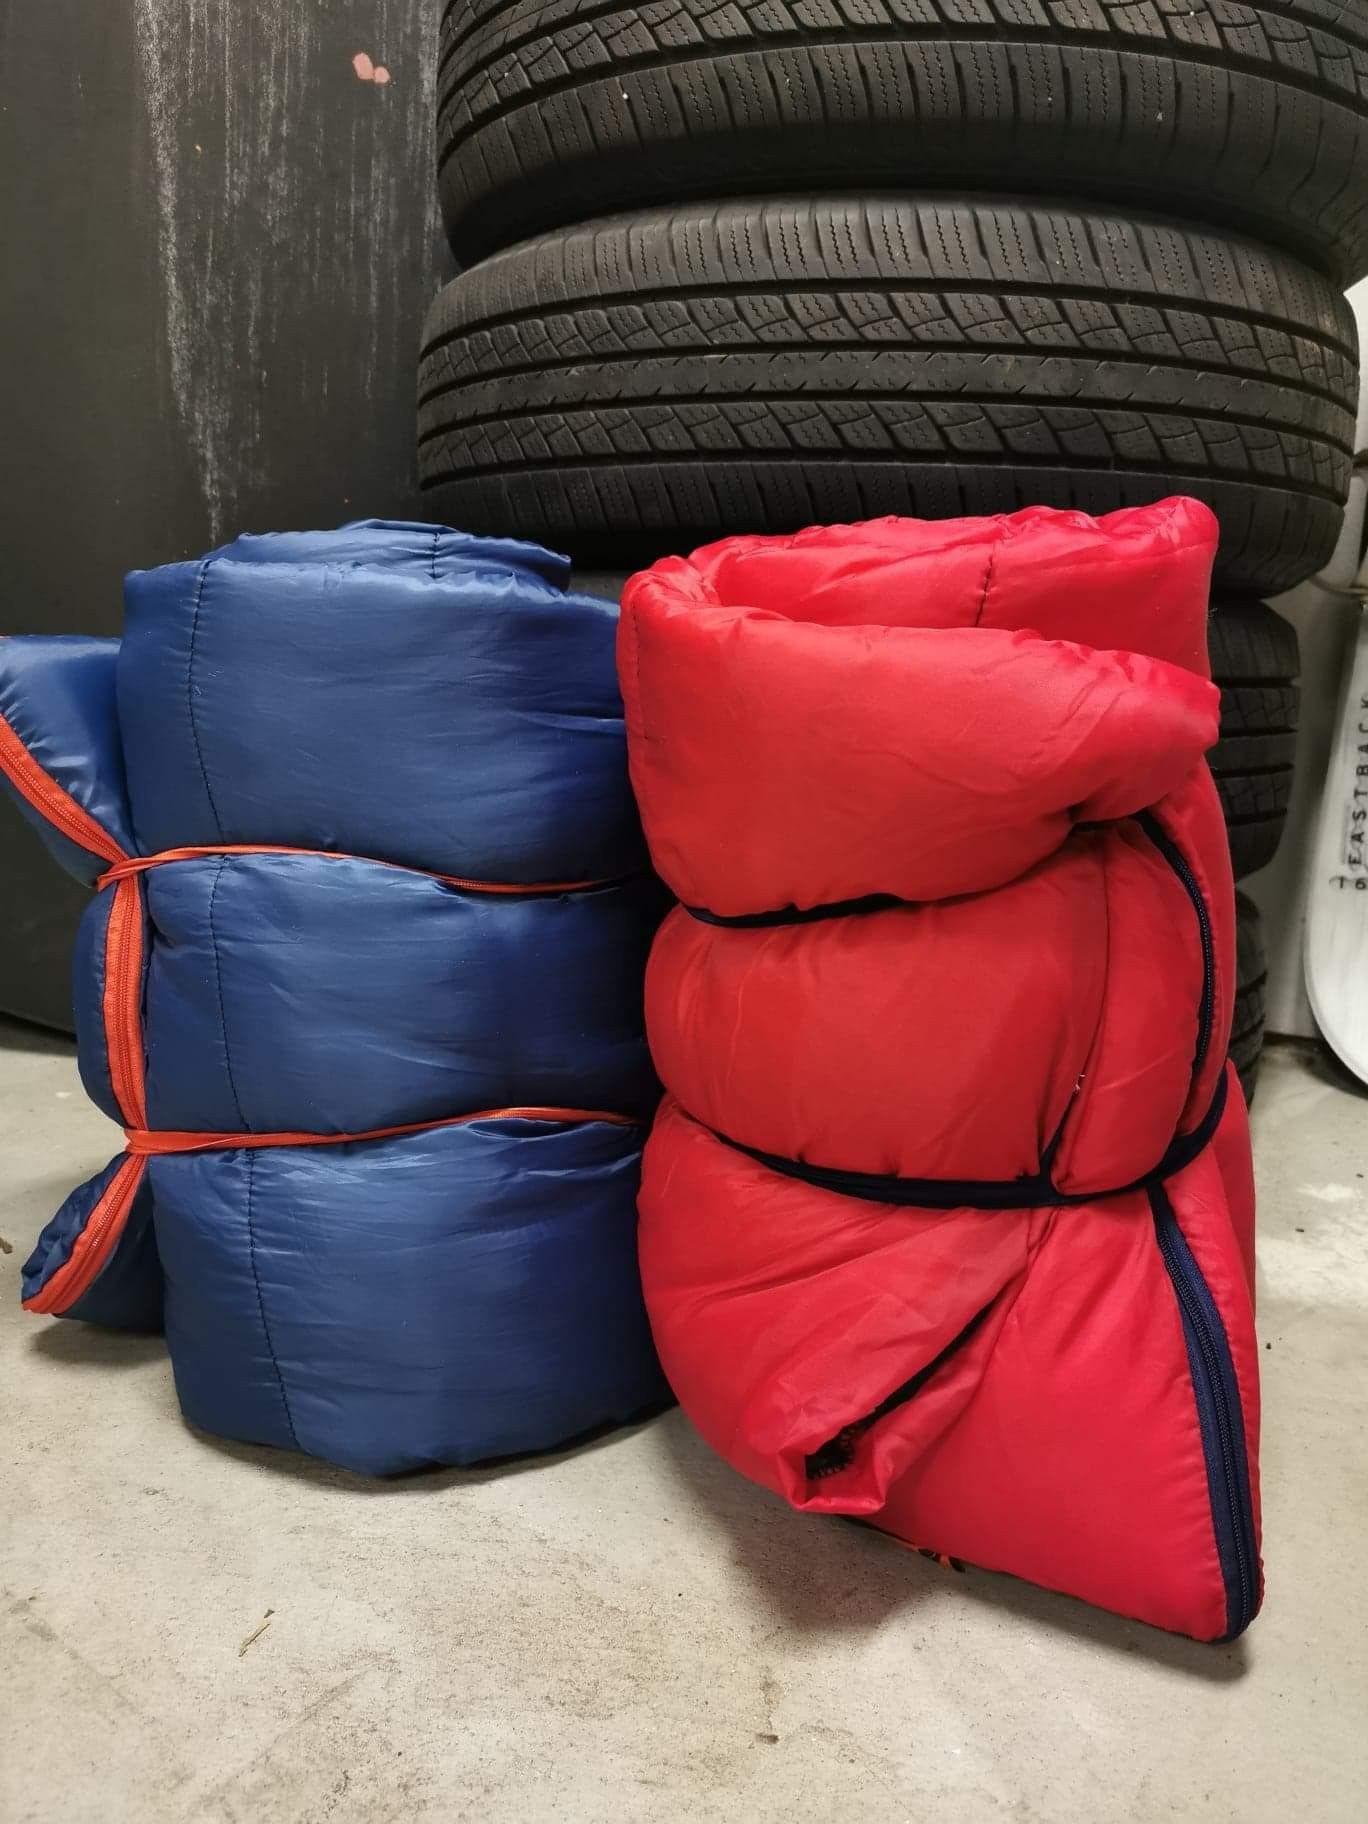 Sleeping bags set